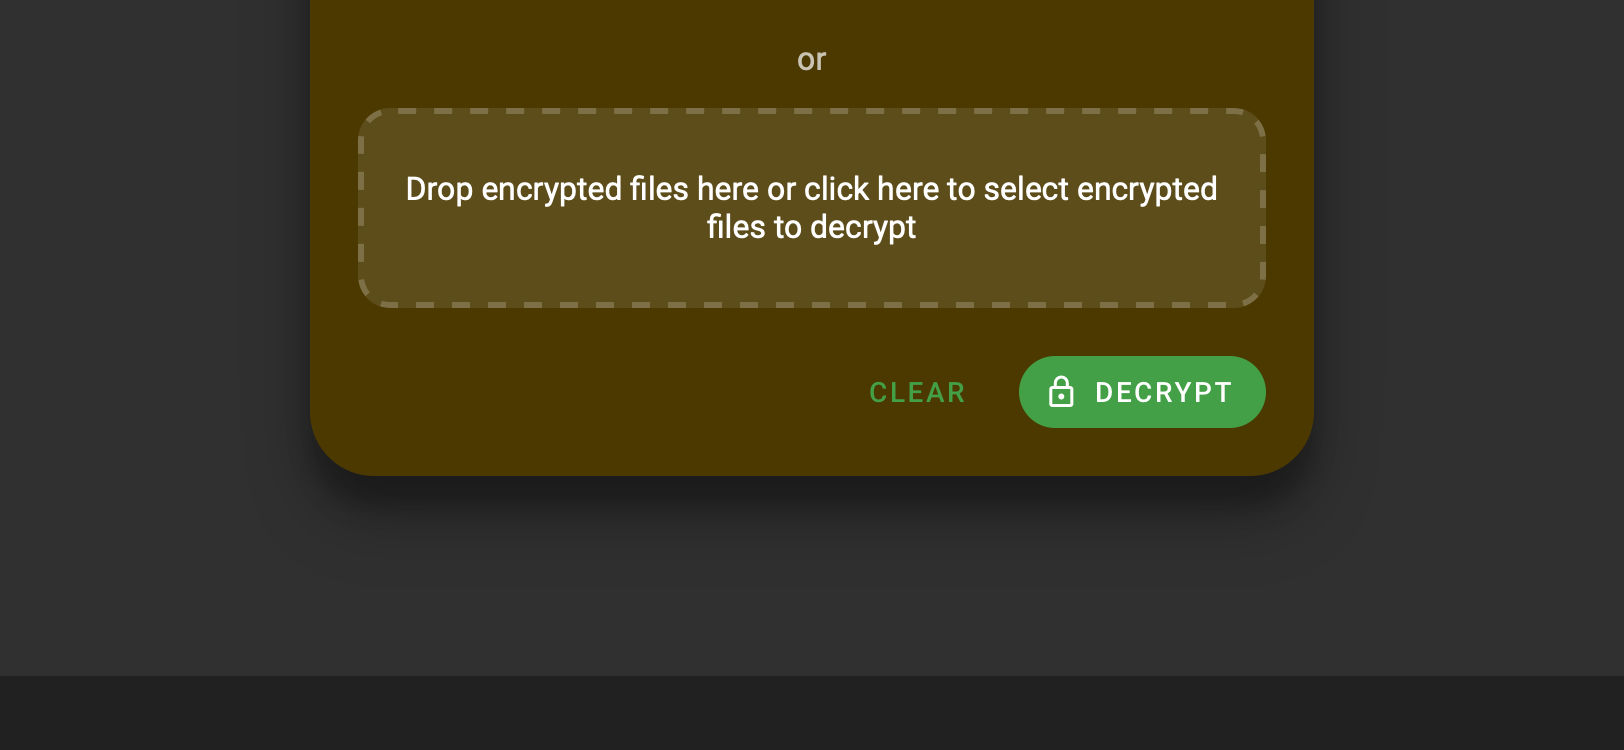 main-test-ts-encrypt-decrypt-decrypt-page-file-decryption-screenshot-812-375-1-snap.png